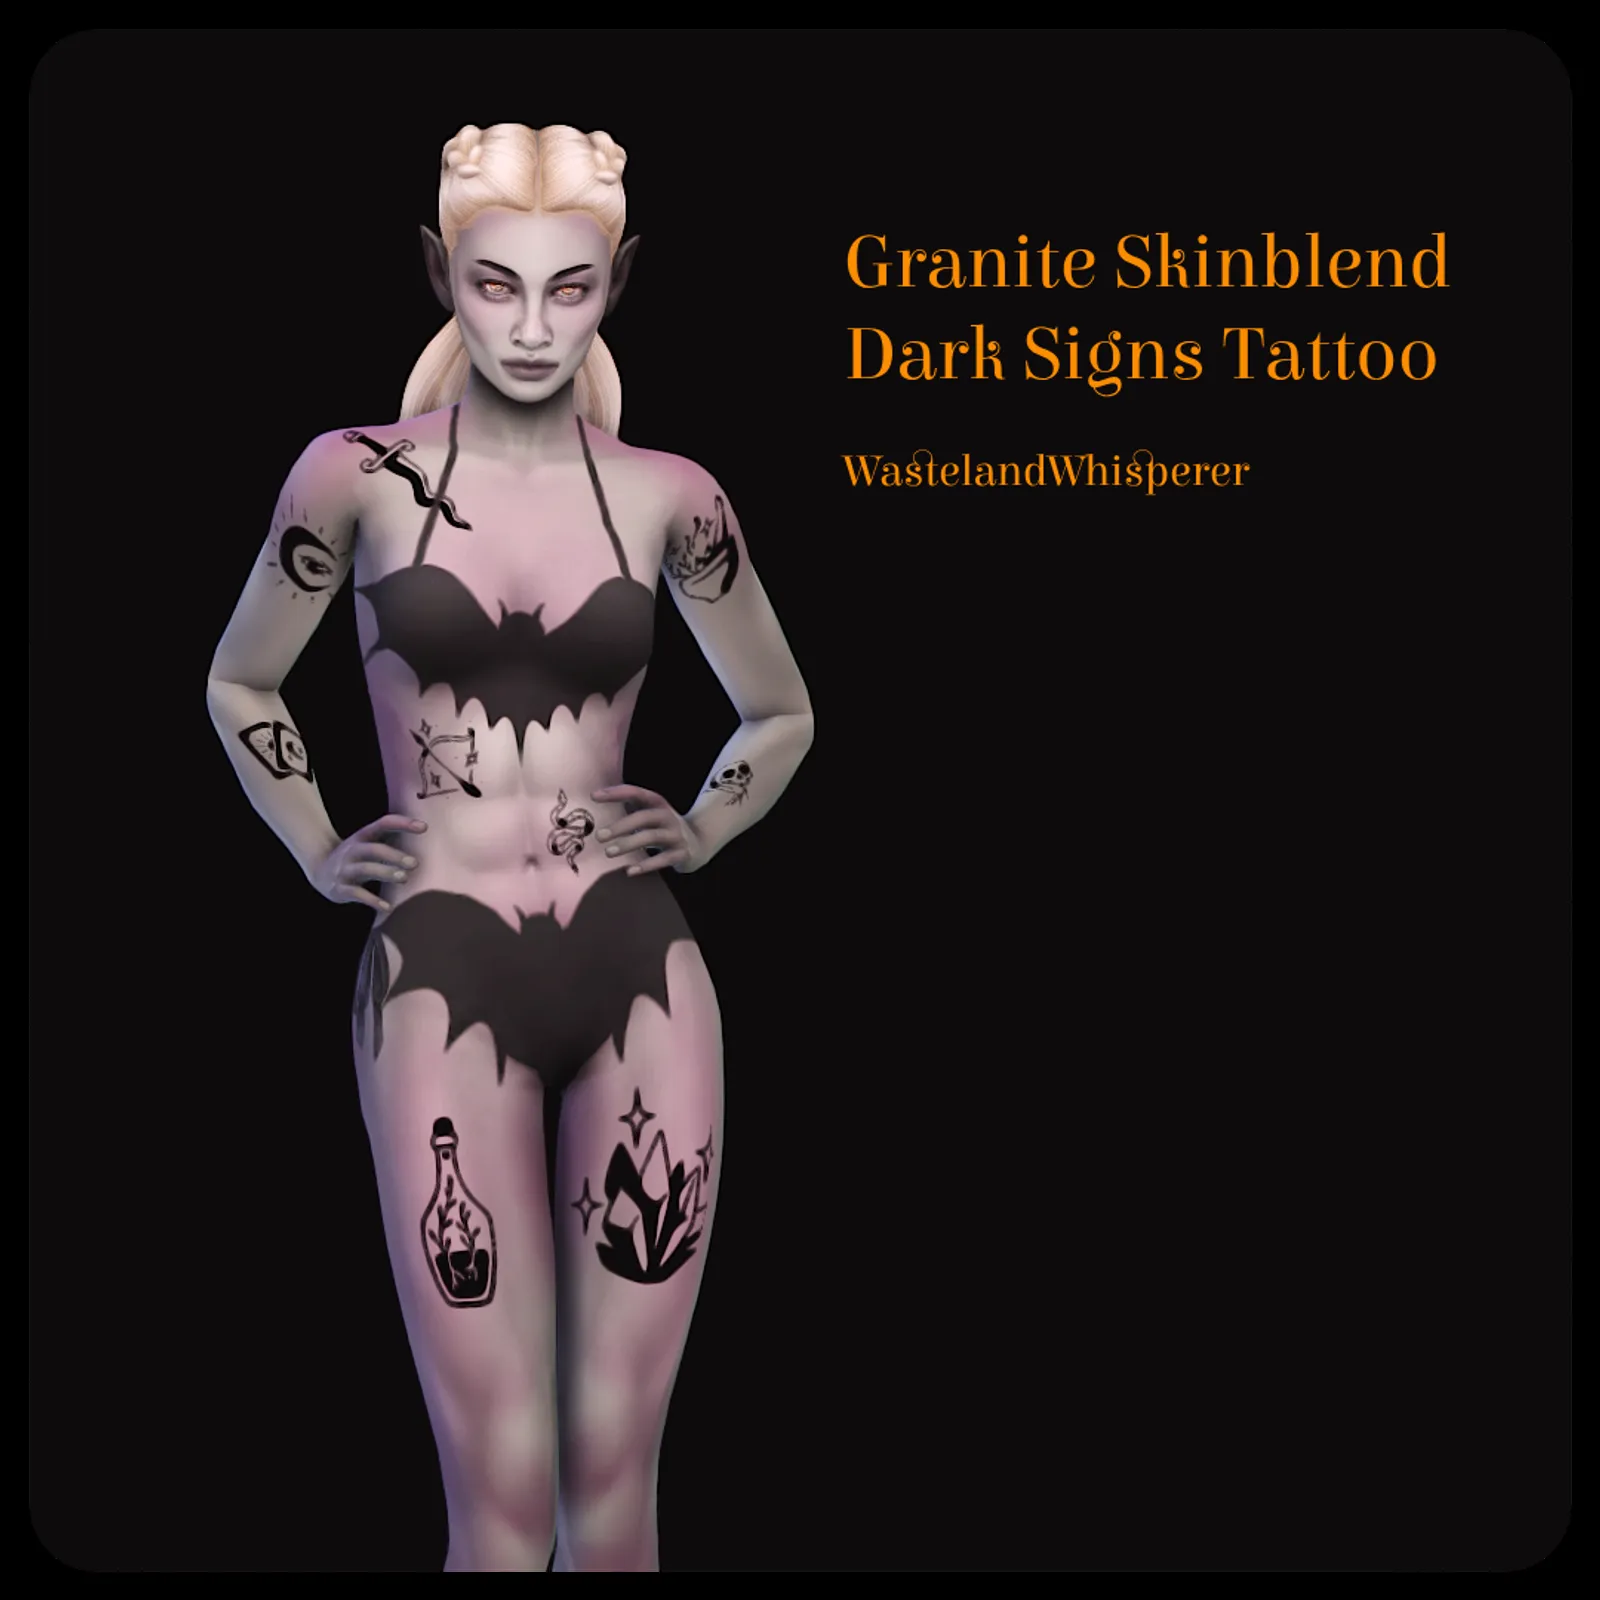 Granite Skinblend & Dark Signs Tattoo